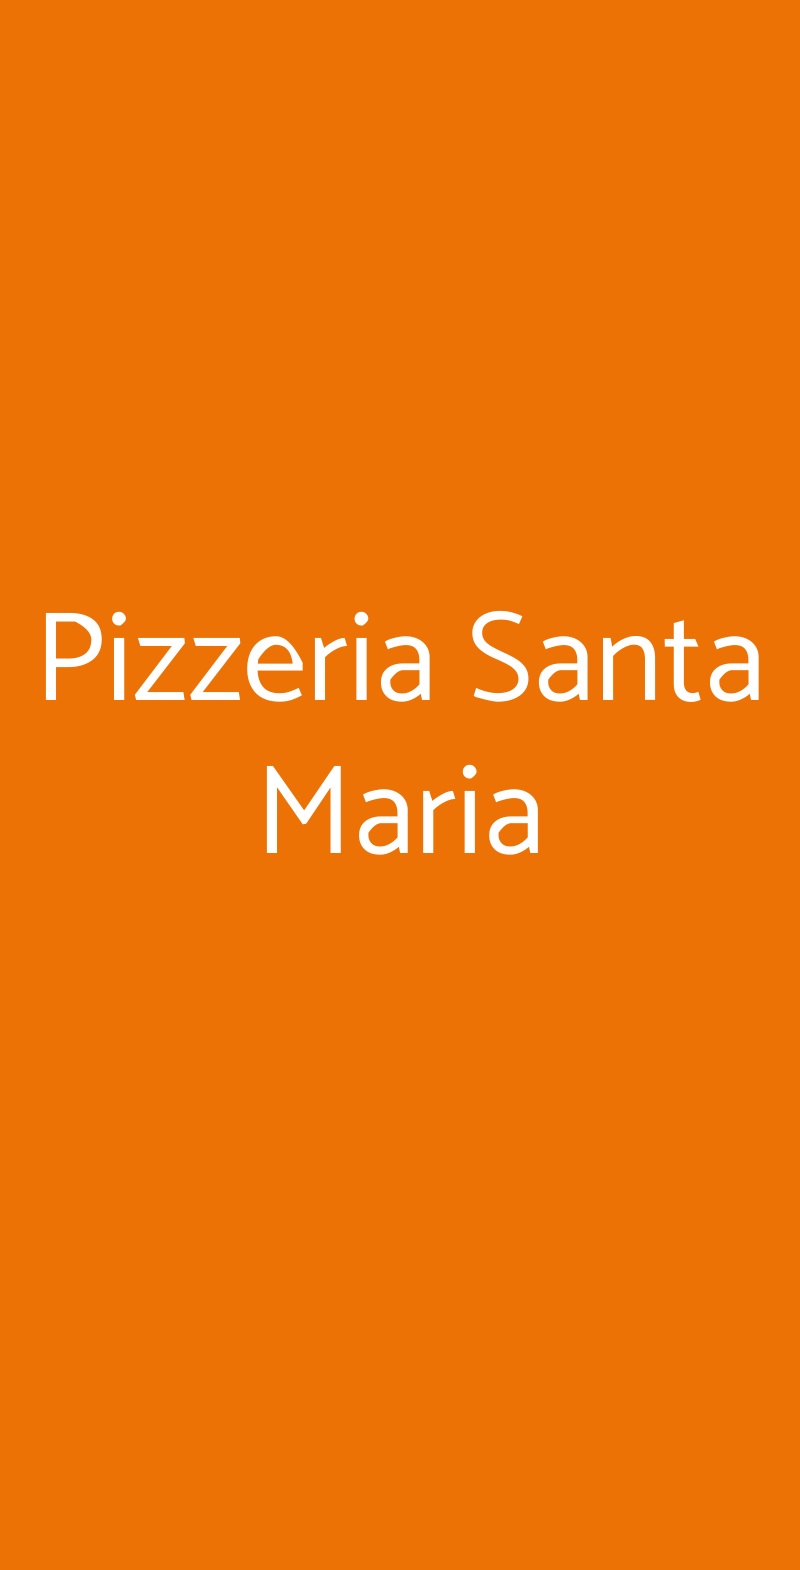 Pizzeria Santa Maria Milano menù 1 pagina